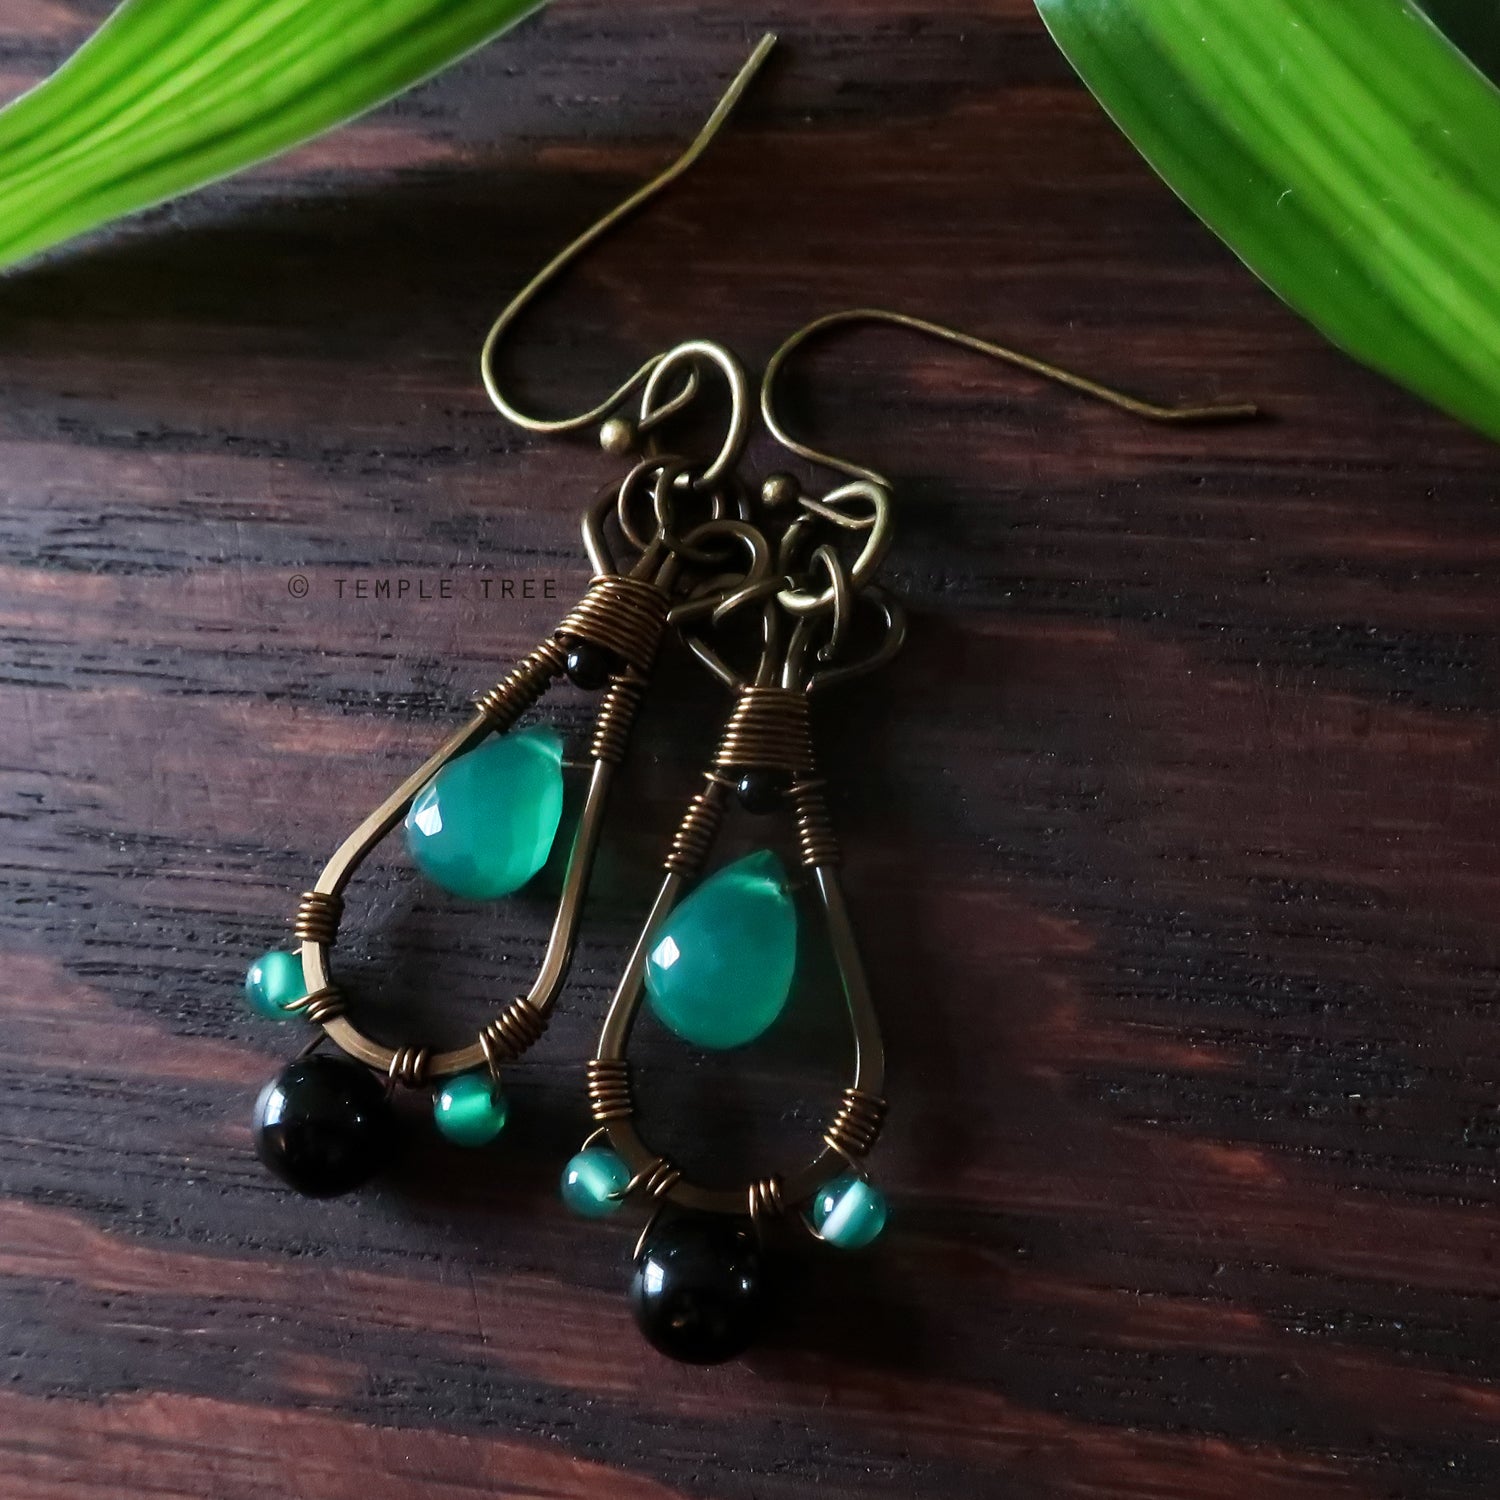 Temple Tree Pendulum Dangle Earrings in Bronze - Green Onyx